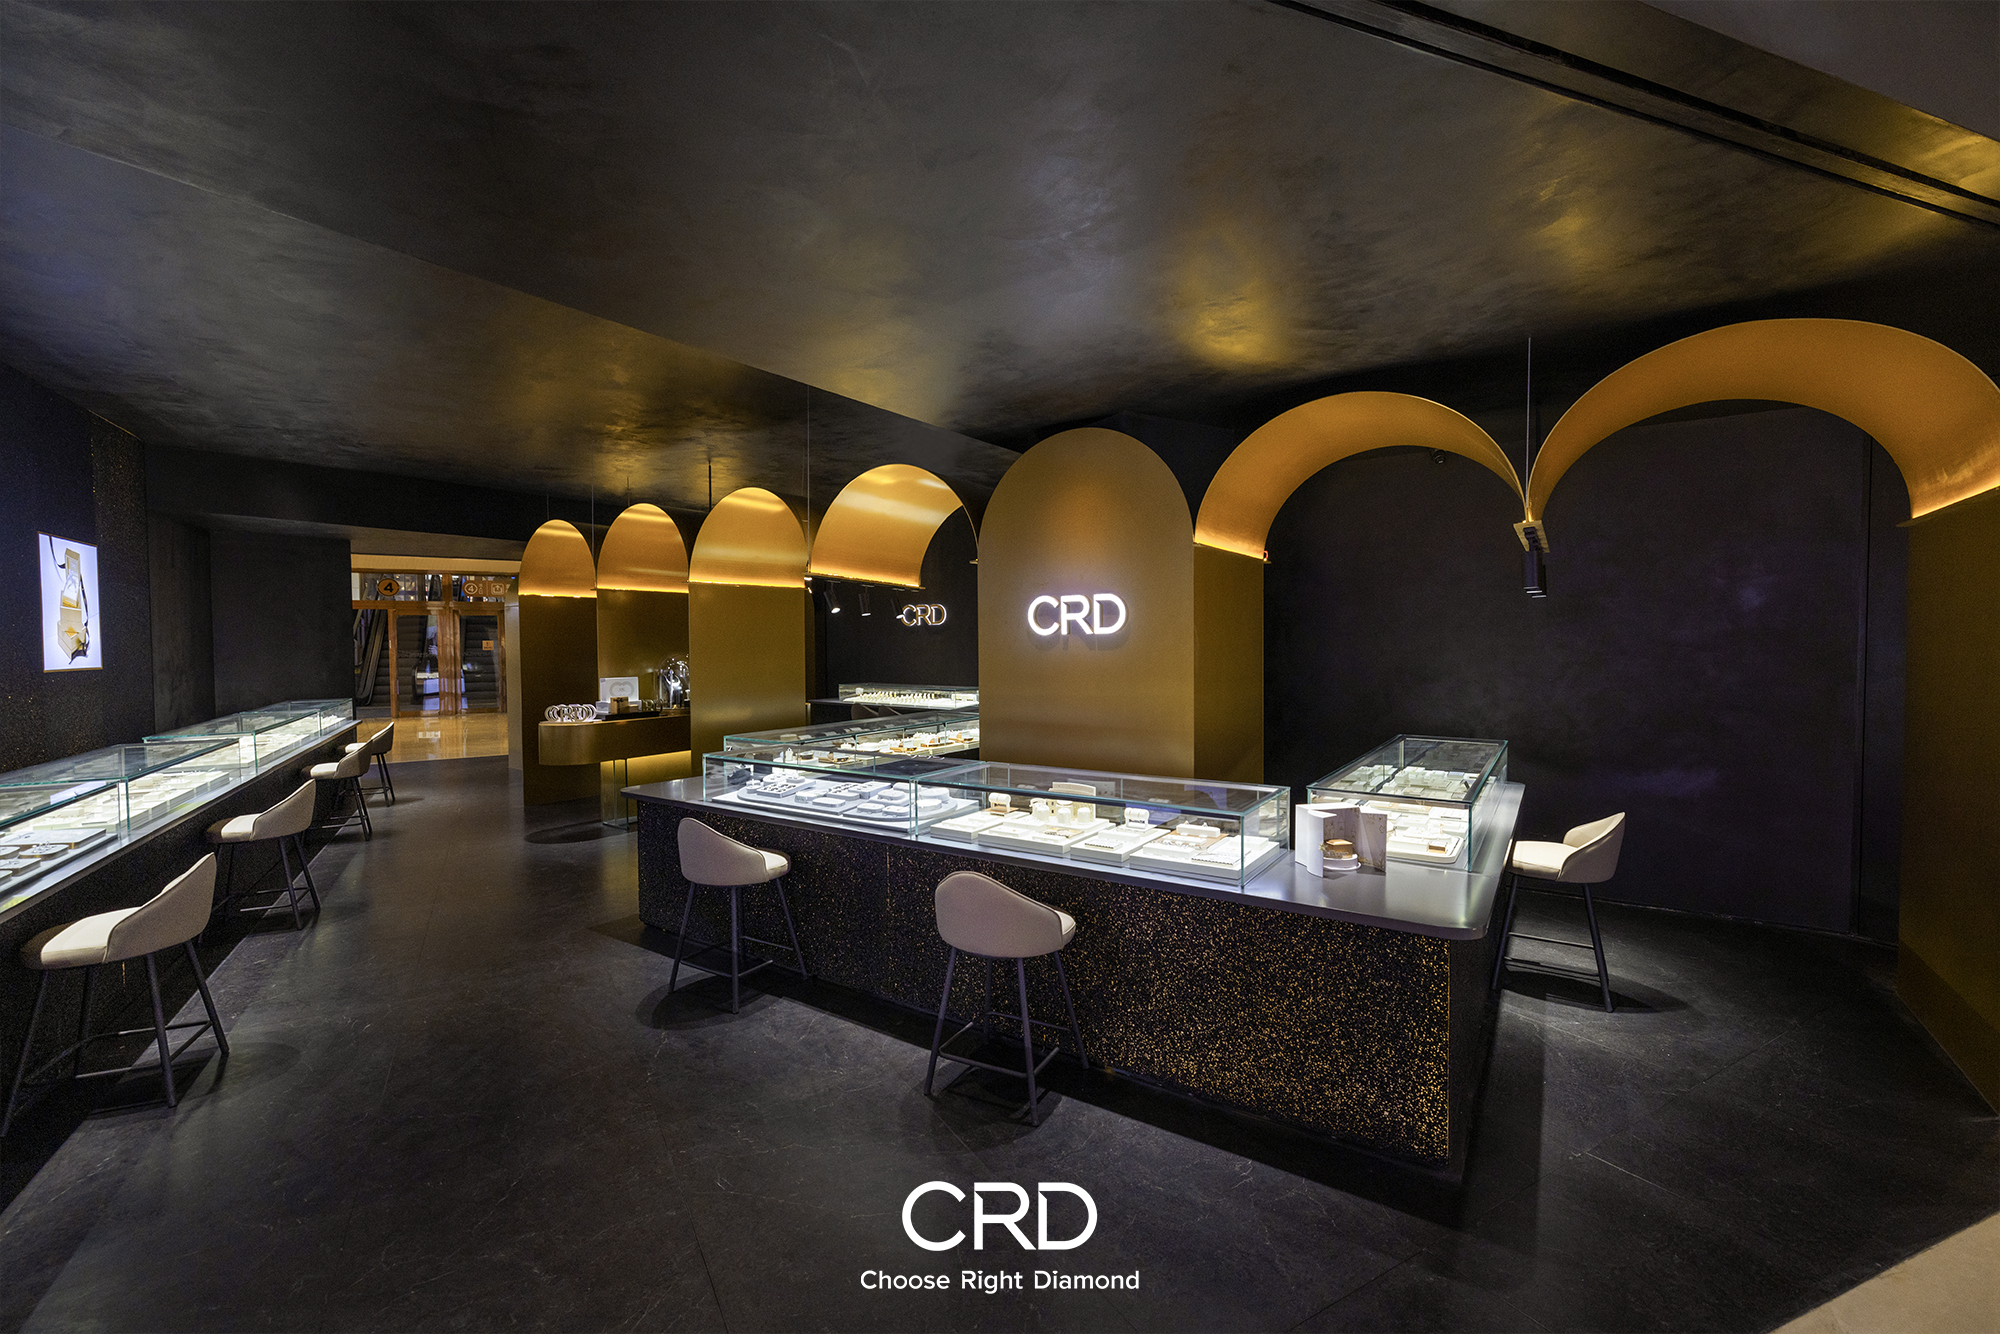 CRD克徠帝黑金概念主題空間于長沙國金街閃耀揭幕